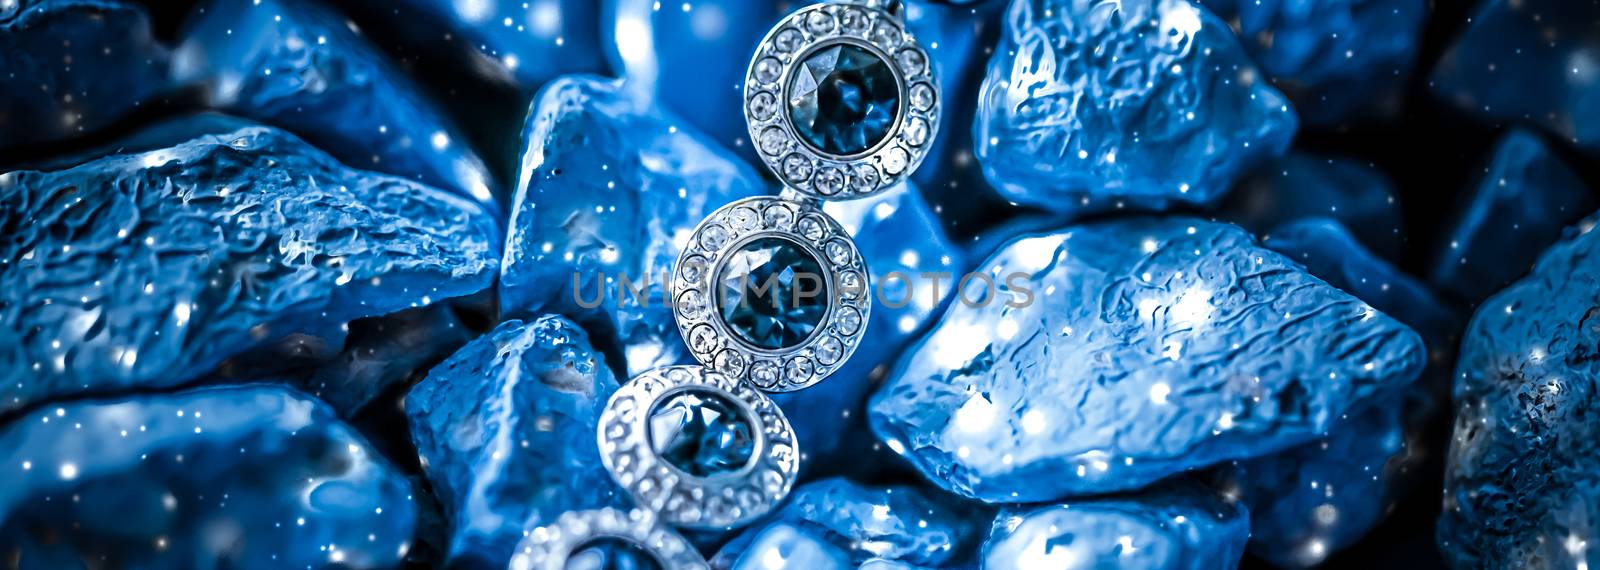 Luxury diamond bracelet, jewelry and fashion brand by Anneleven